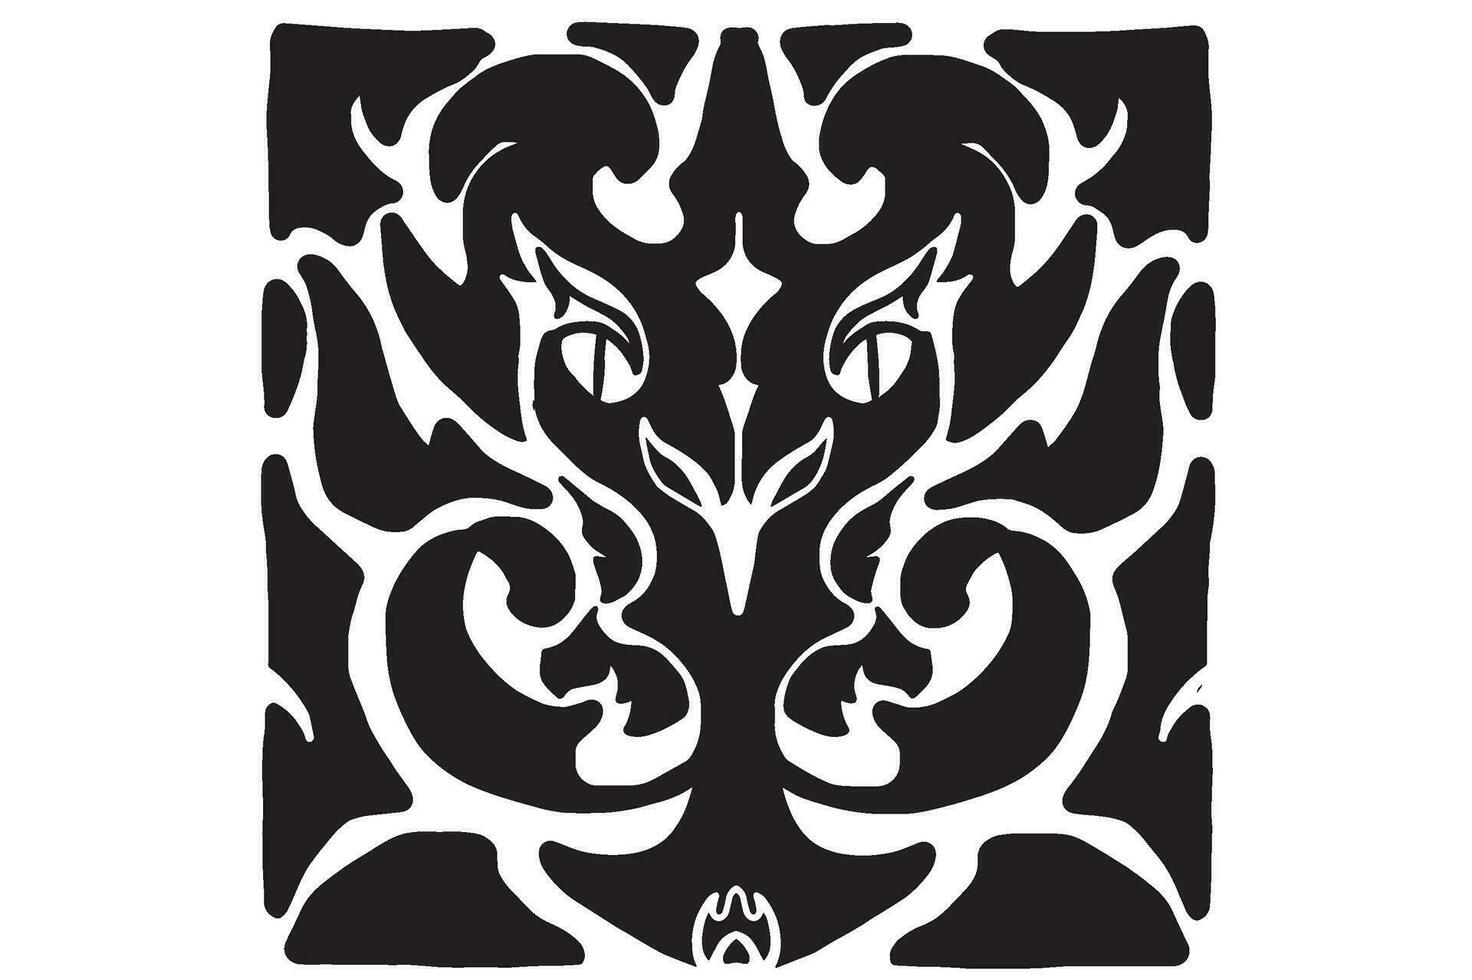 Square Boar Monster Emblem Tattoo vector